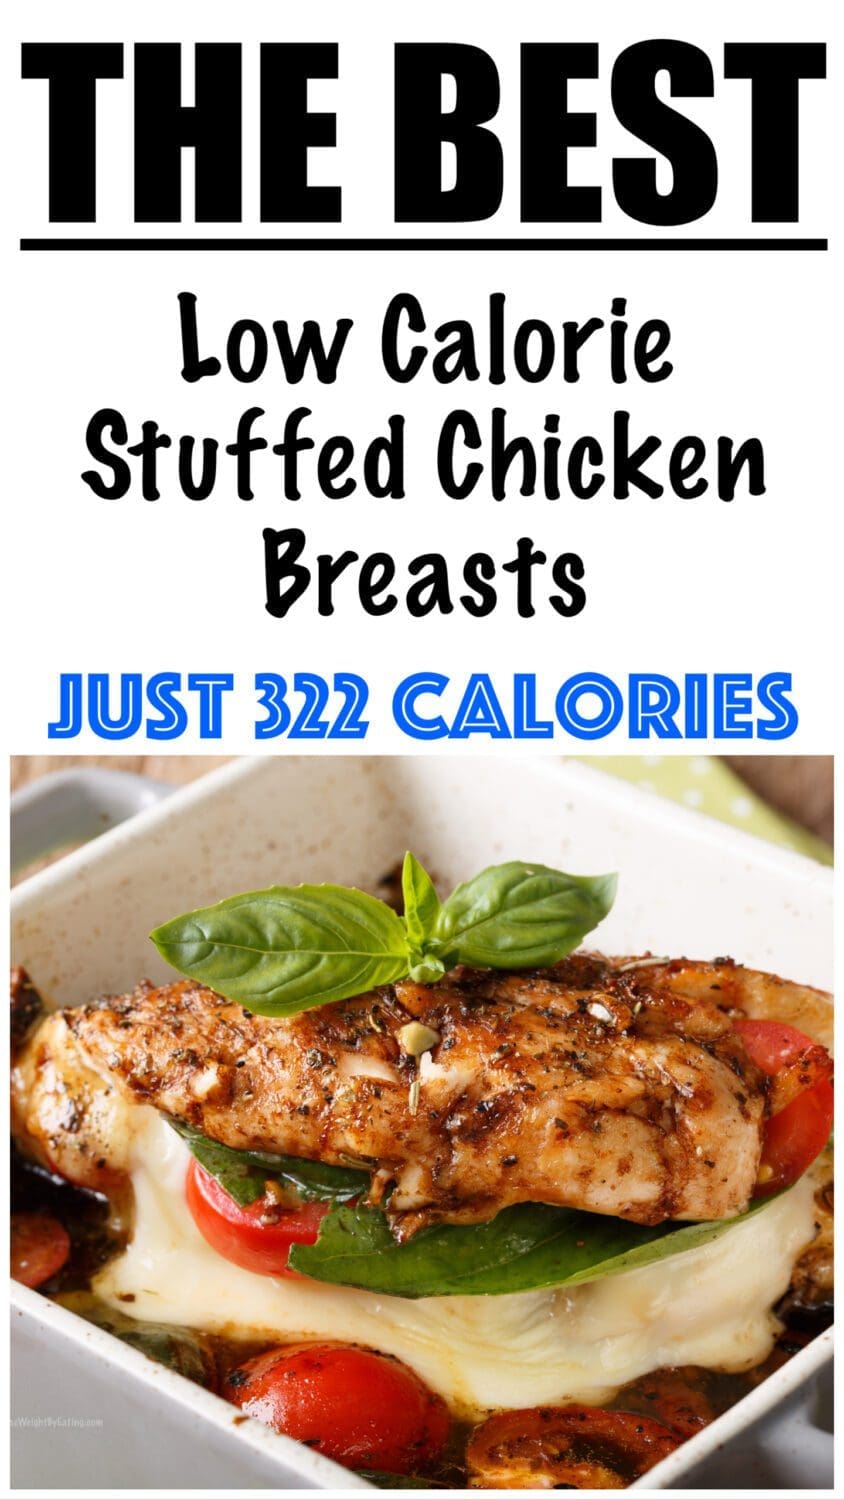 Low Calorie Stuffed Chicken Breast Recipe